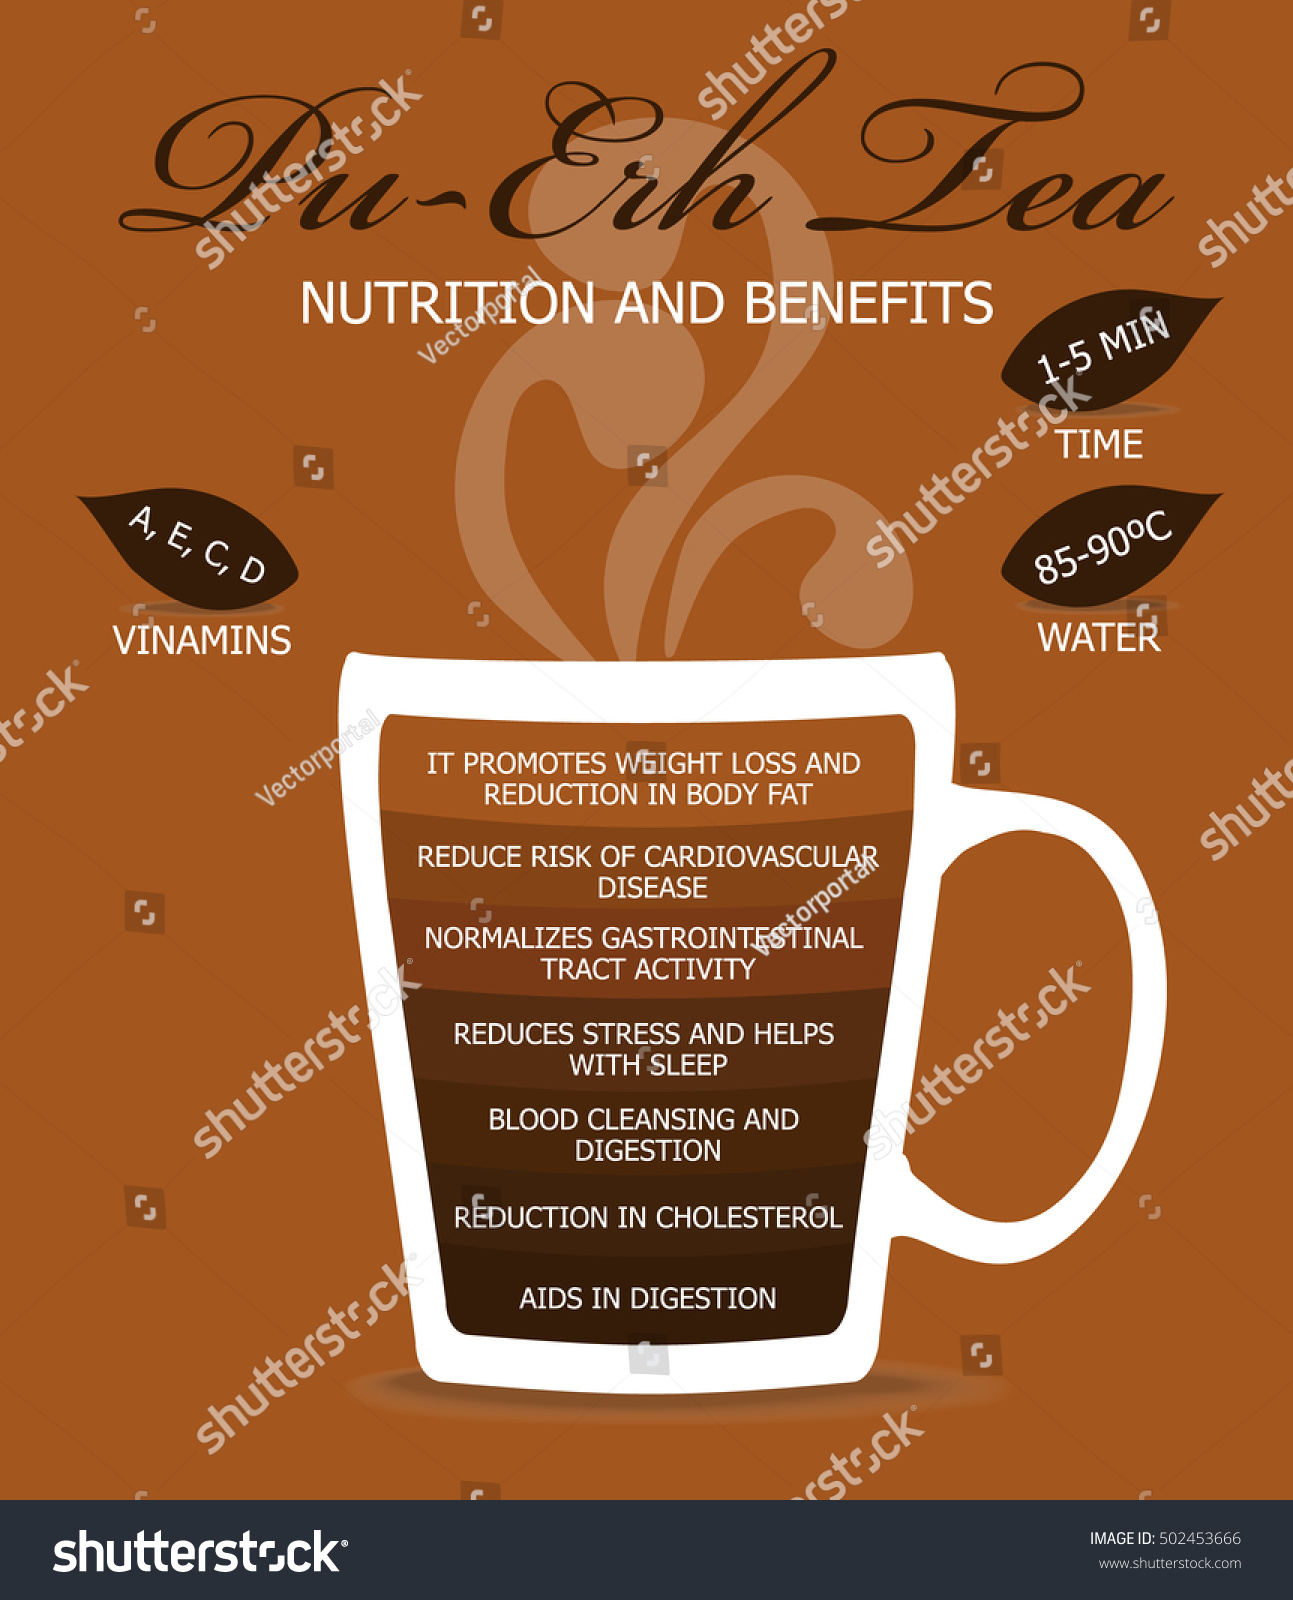 Nutrition Benefits Tea Puerh Tea Infographic Stock Vector Royalty Free